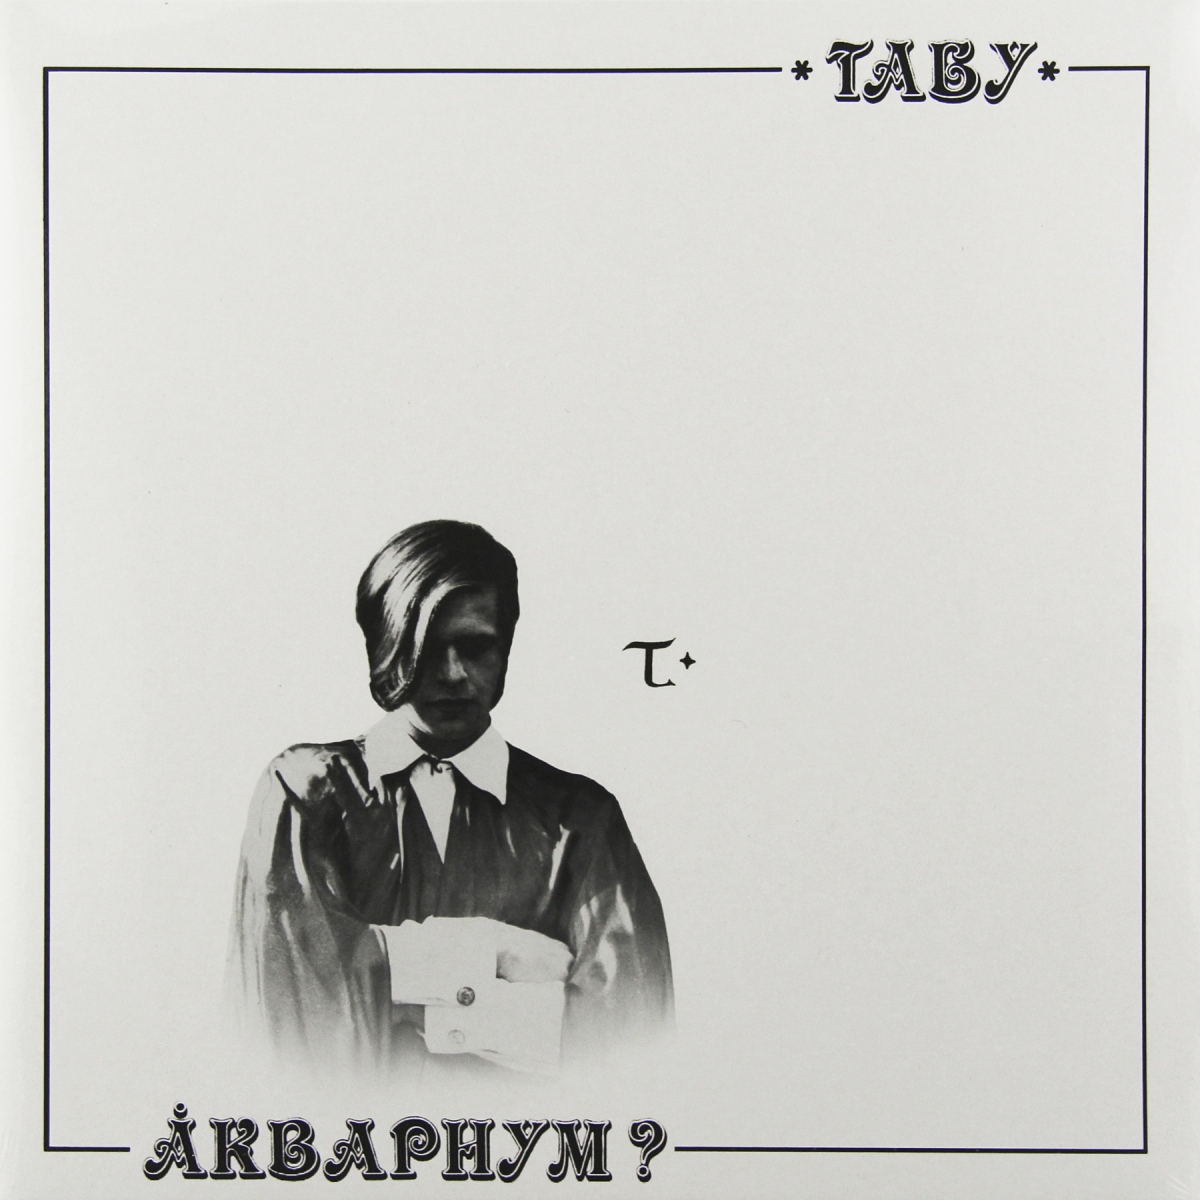 Akvarium的《禁忌》专辑的封面